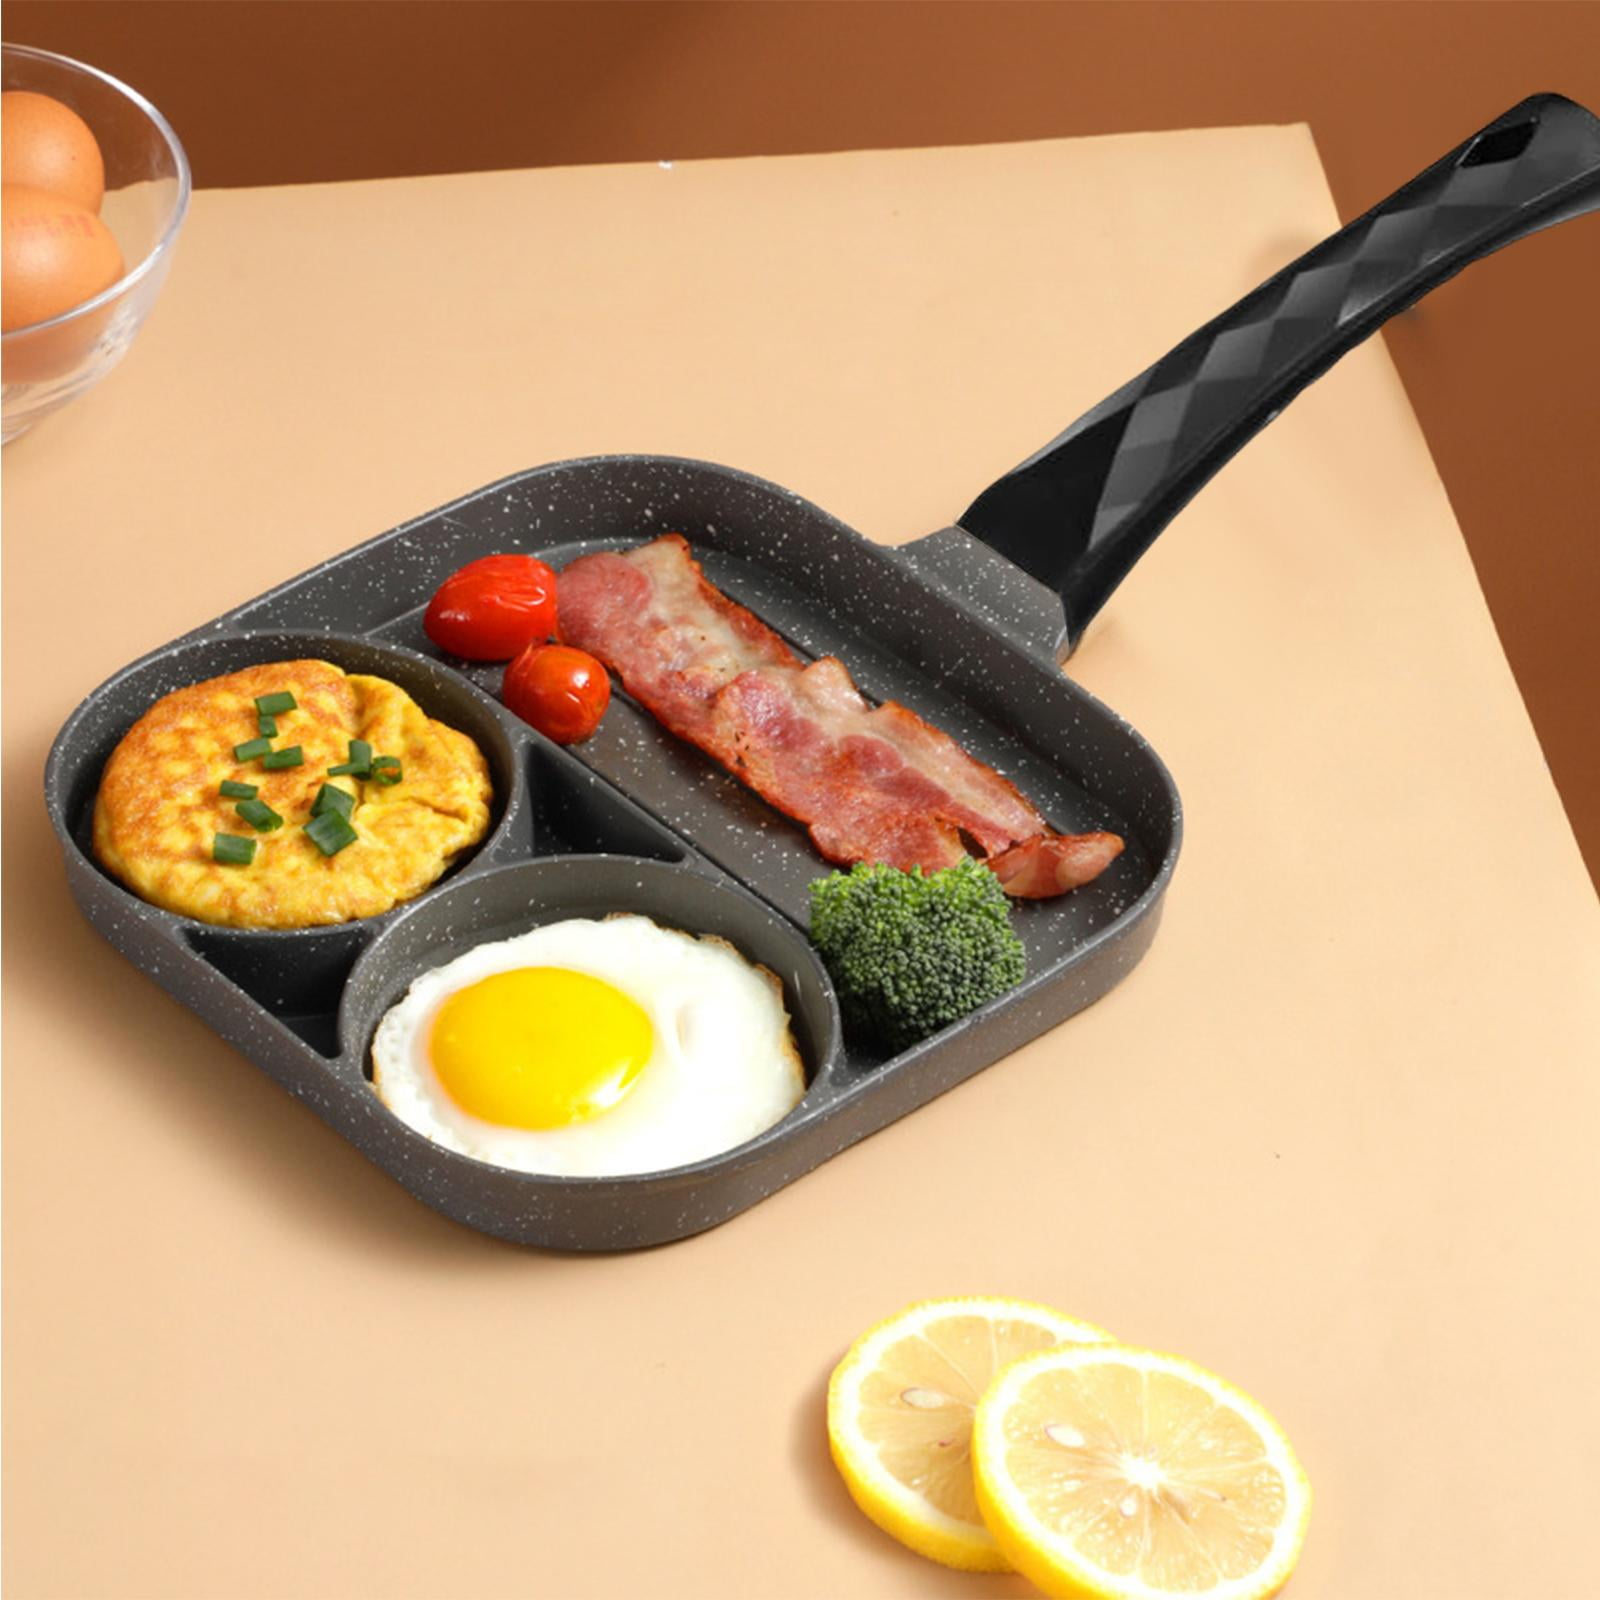 6 Holes Egg Frying Pan Non-stick Breakfast Maker Pot